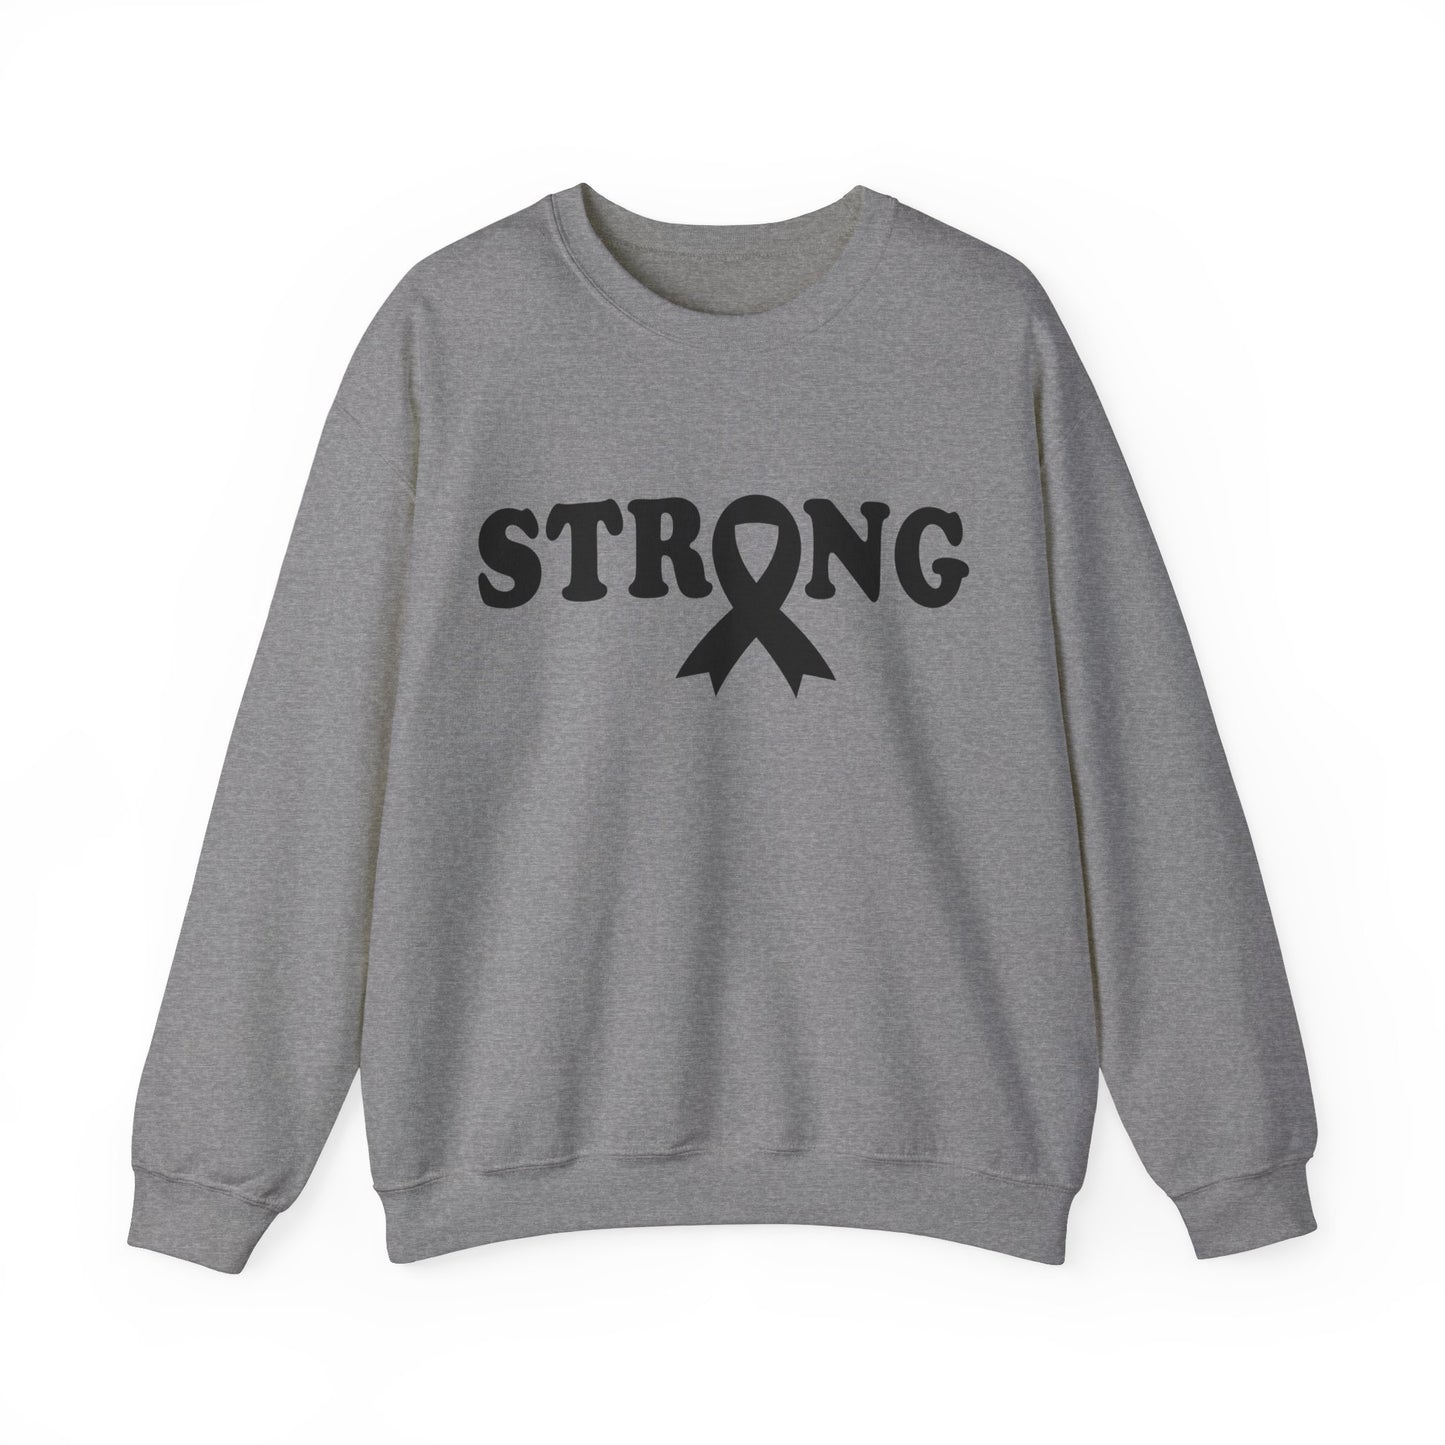 Strong Cancer Advocate Adult Unisex Sweatshirt